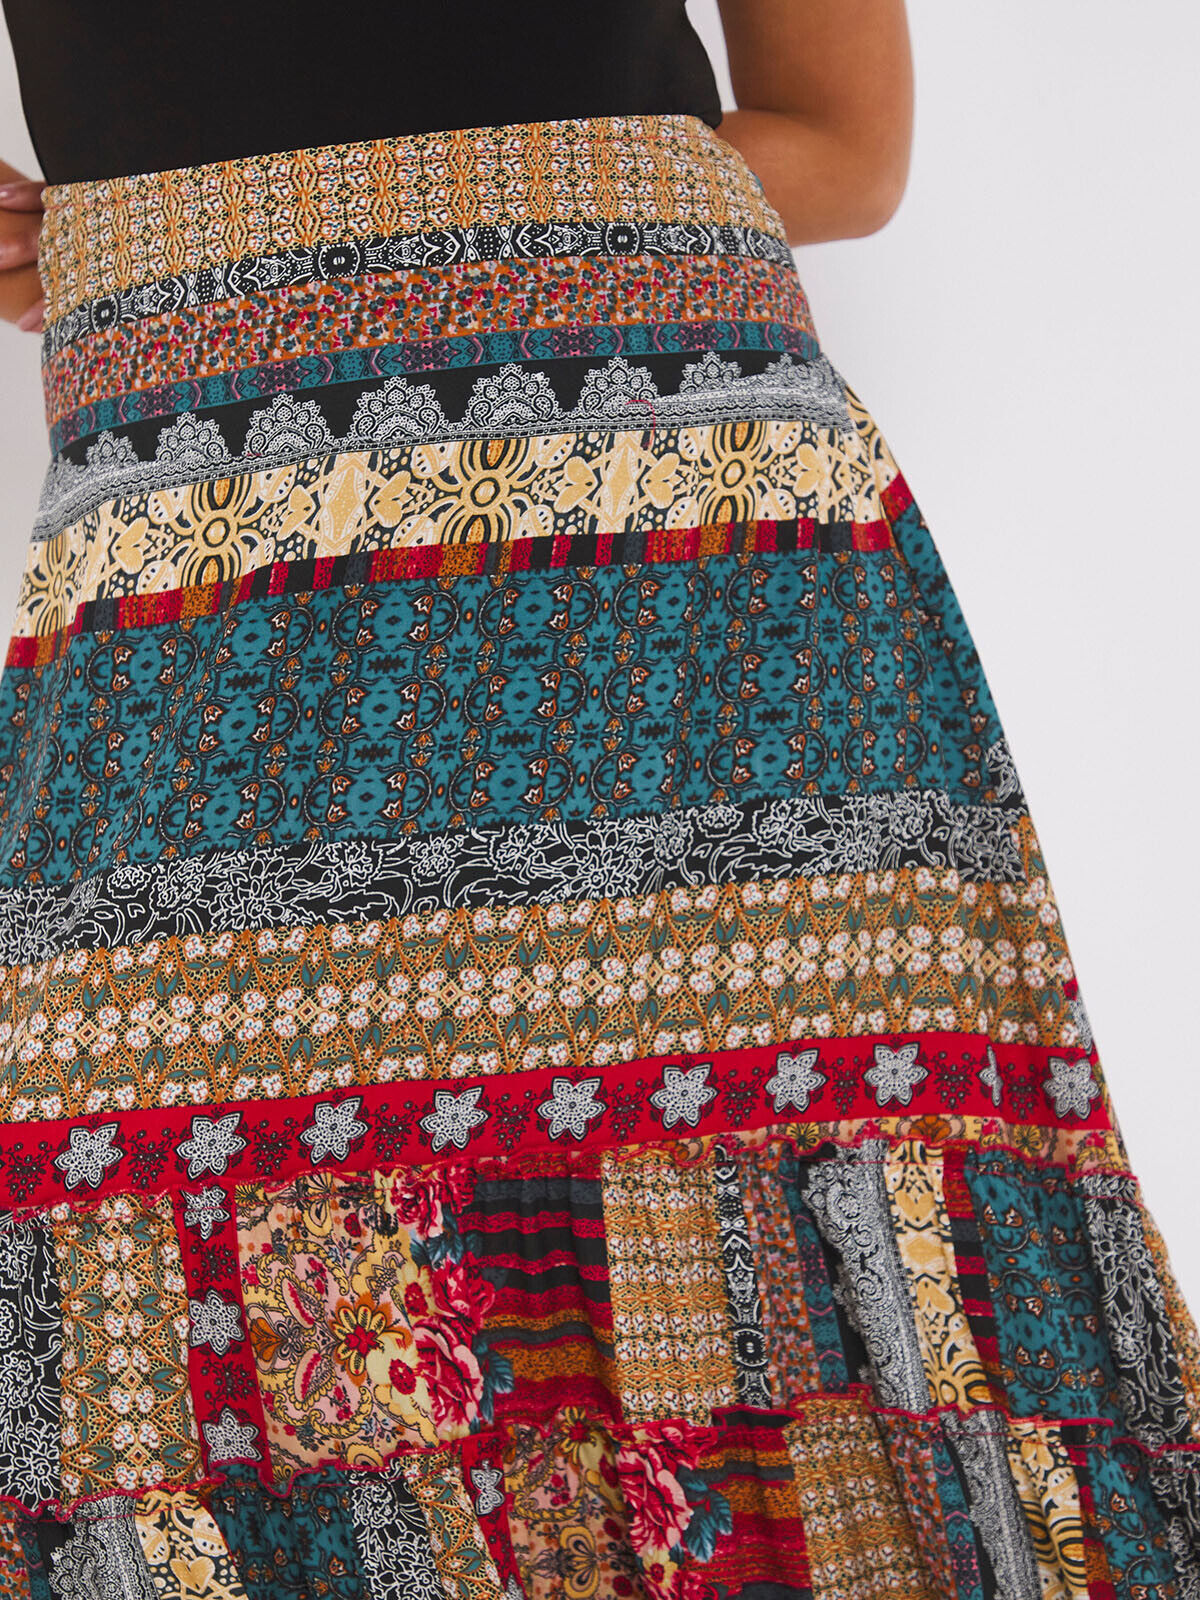 Joe Browns Multi Funky Fishtail Skirt Sizes 14, 20, 22, 24, 26, 28, 32 RRP £45